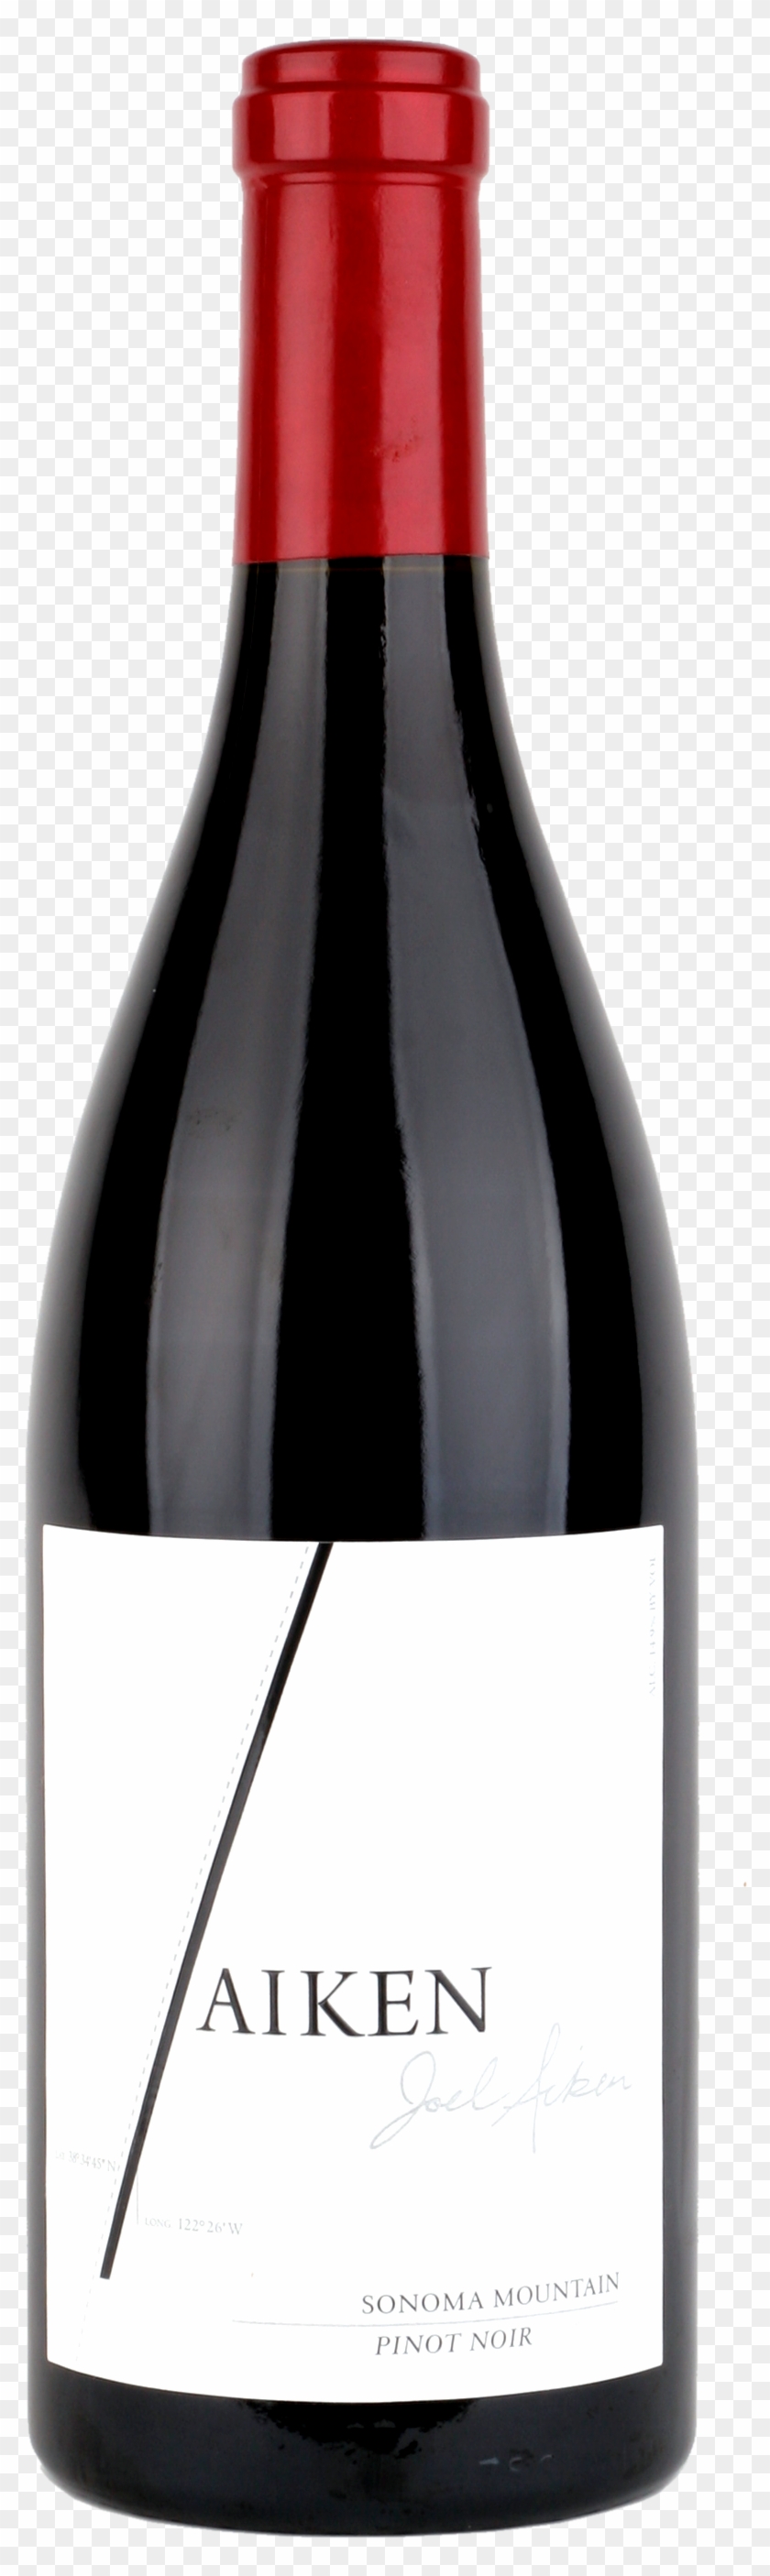 Wine Bottle Png Image Clipart